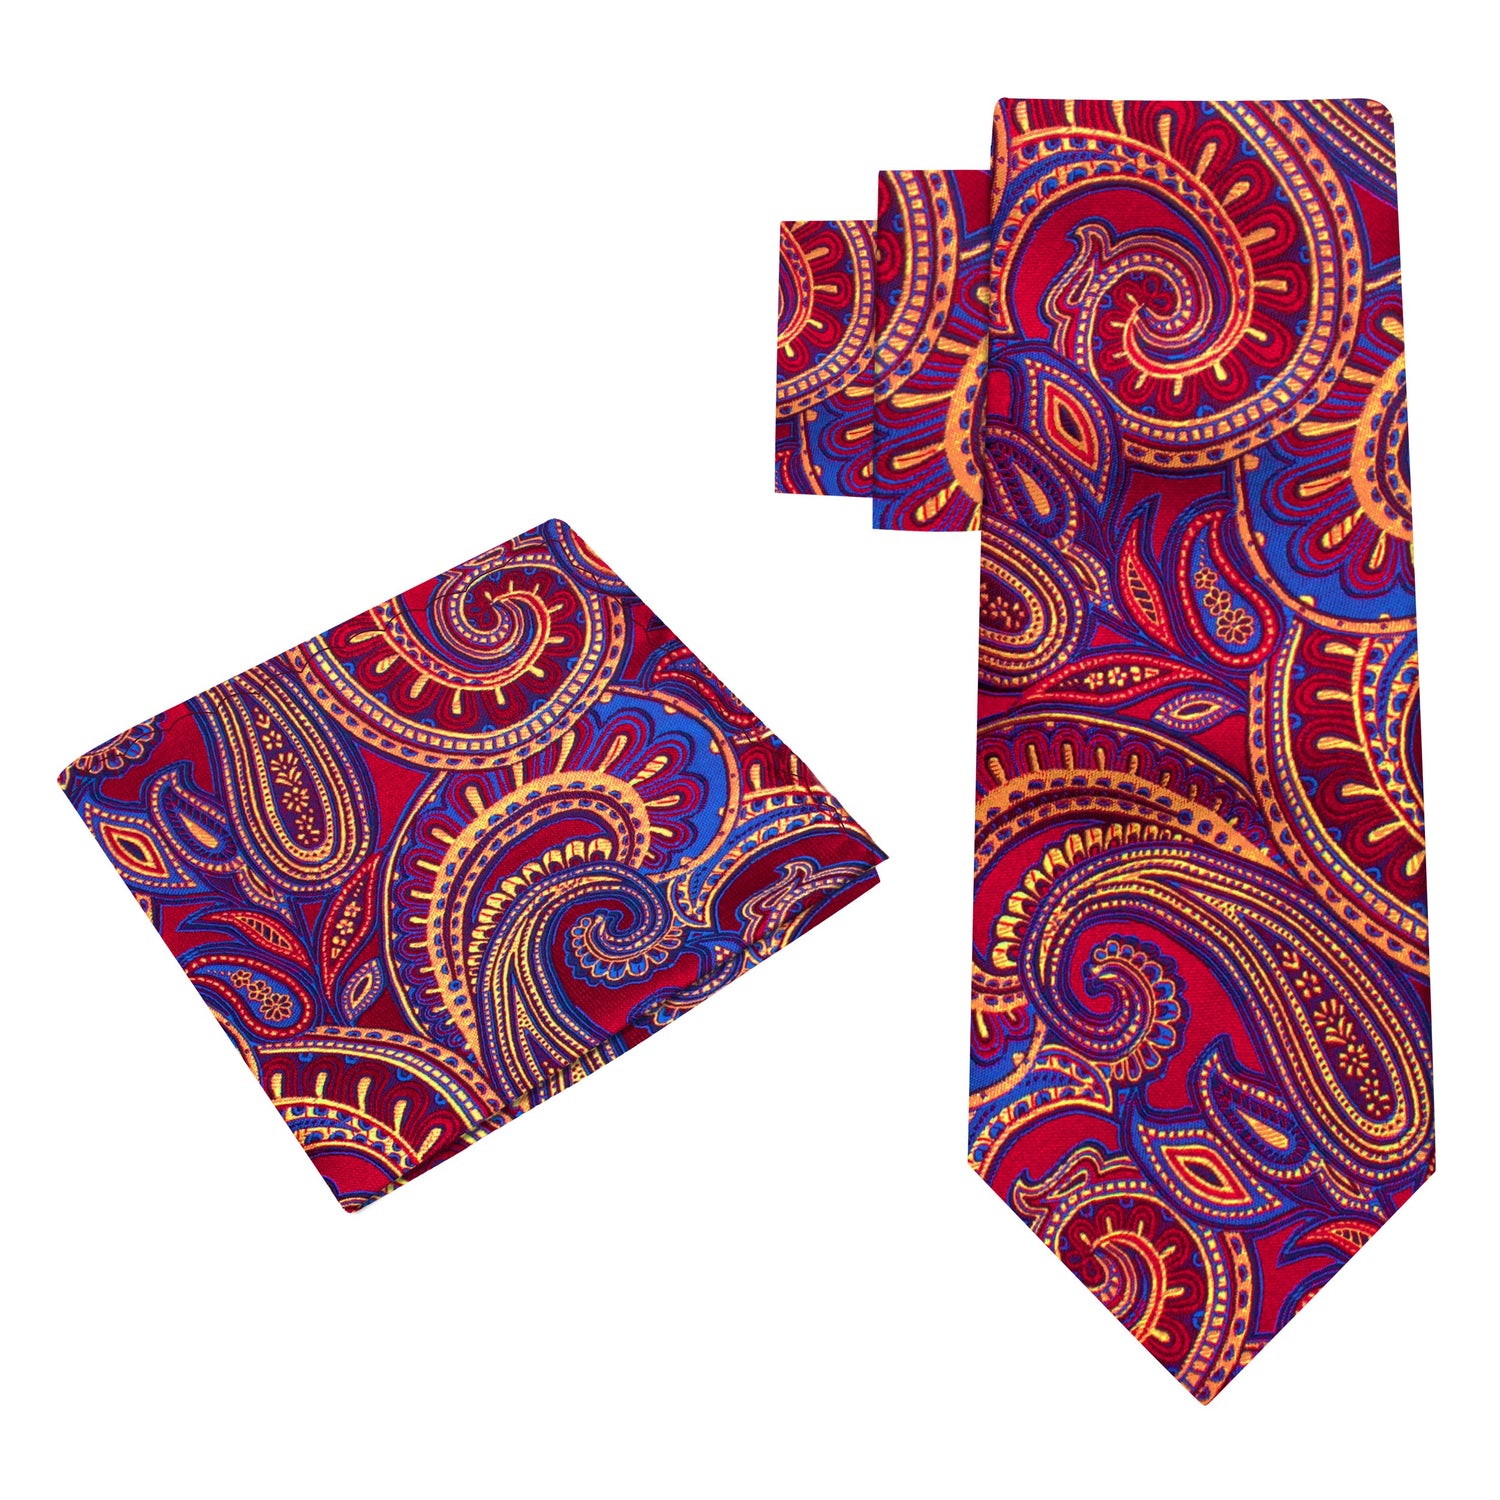 Alt View: A Red, Blue Paisley Pattern Silk Necktie, Matching Silk Pocket Square